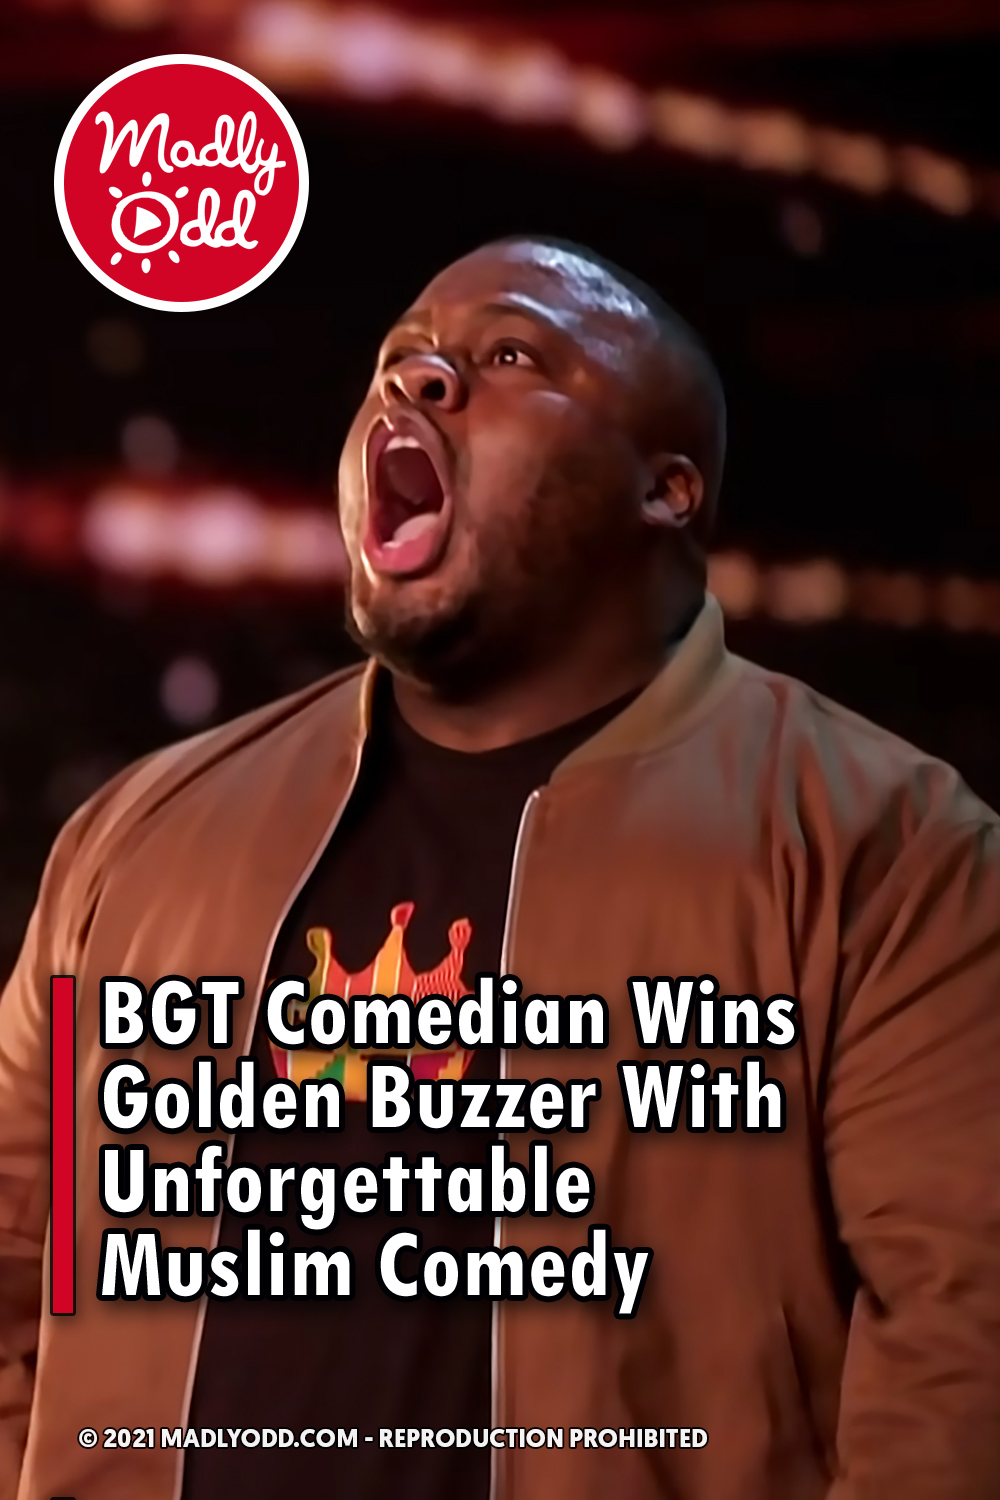 BGT Comedian Wins Golden Buzzer With Unforgettable Muslim Comedy